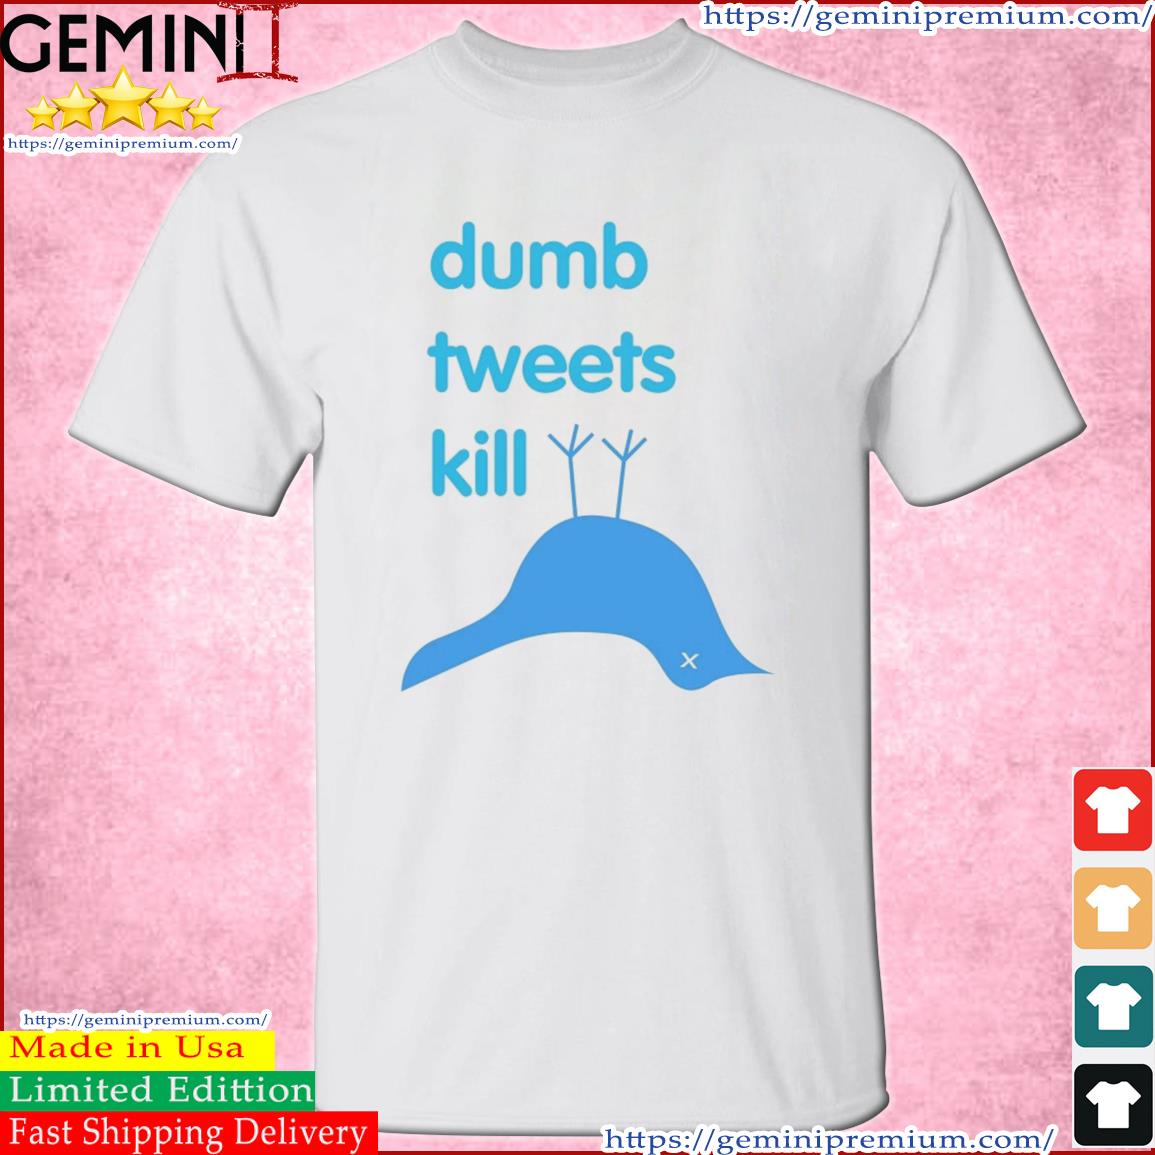 Dumb Tweets Kill T-Shirt